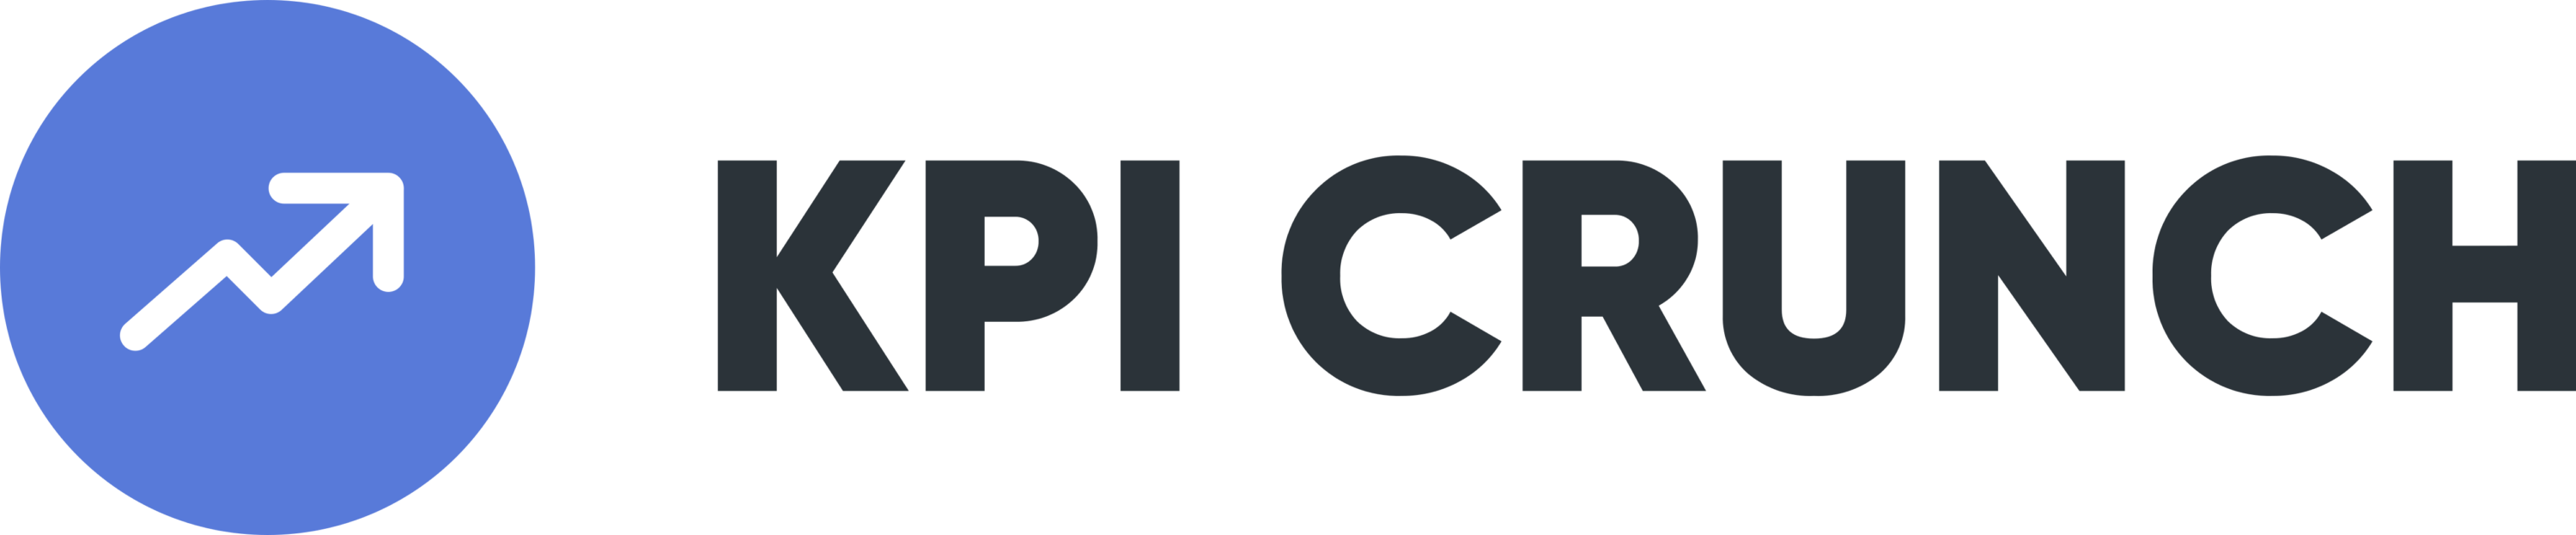 KPI Crunch Logo